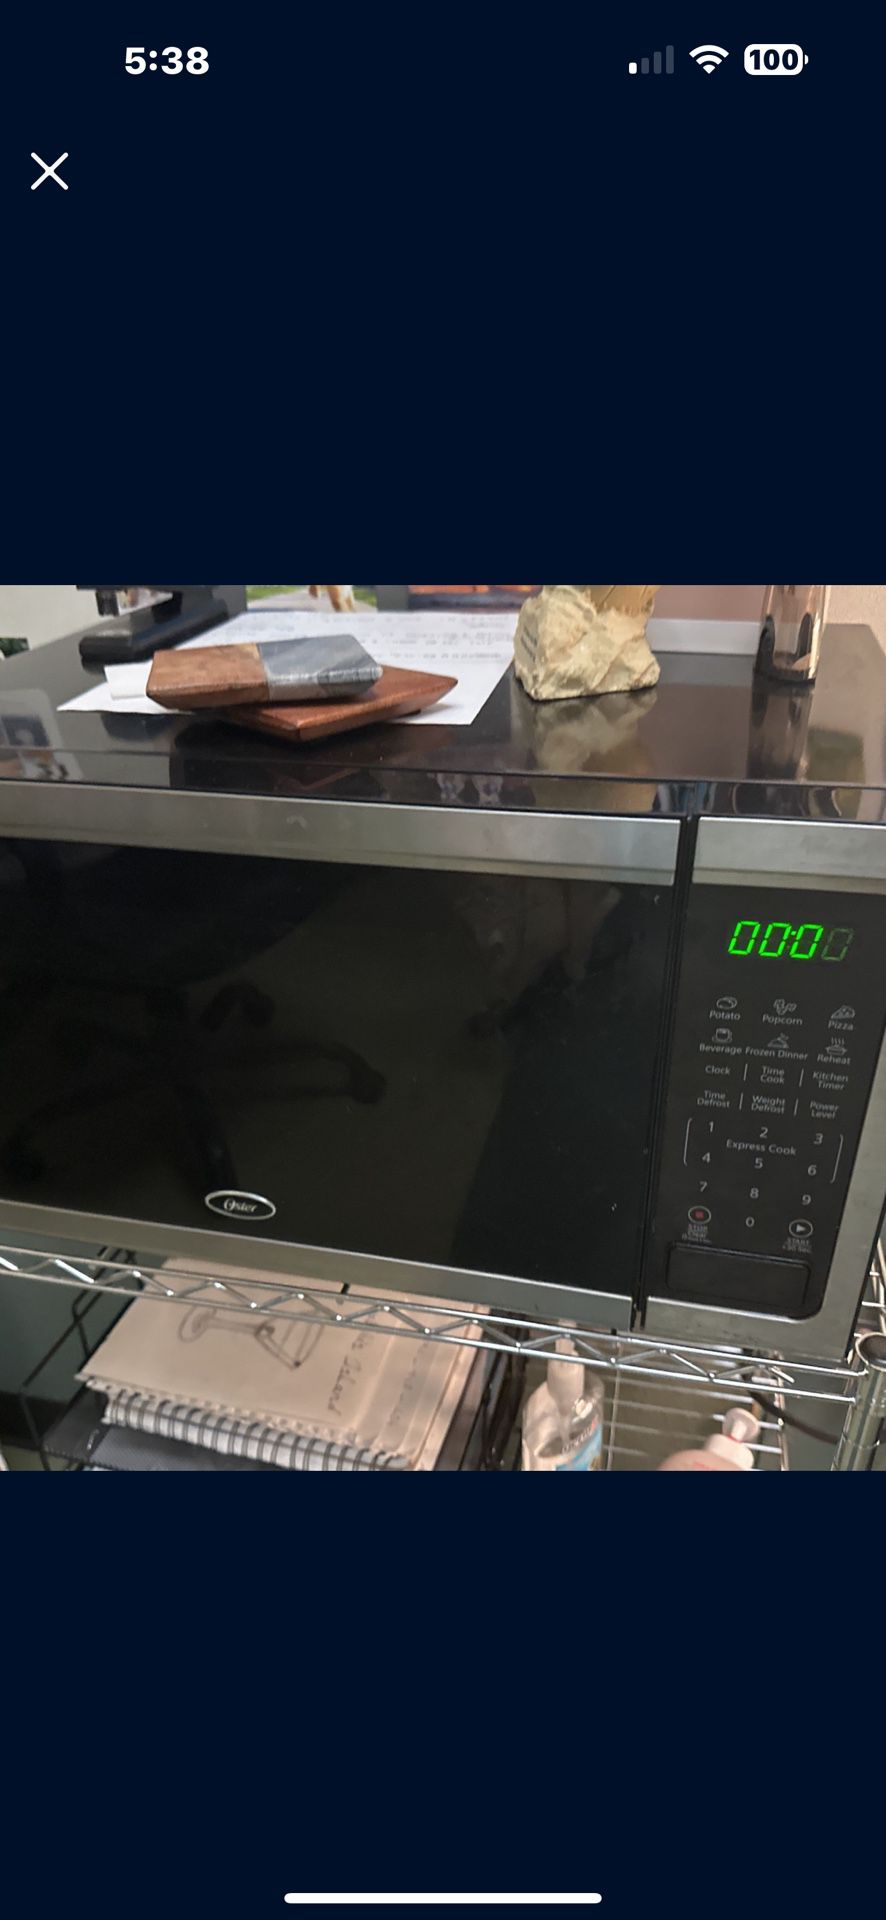 Countertop Microwave 